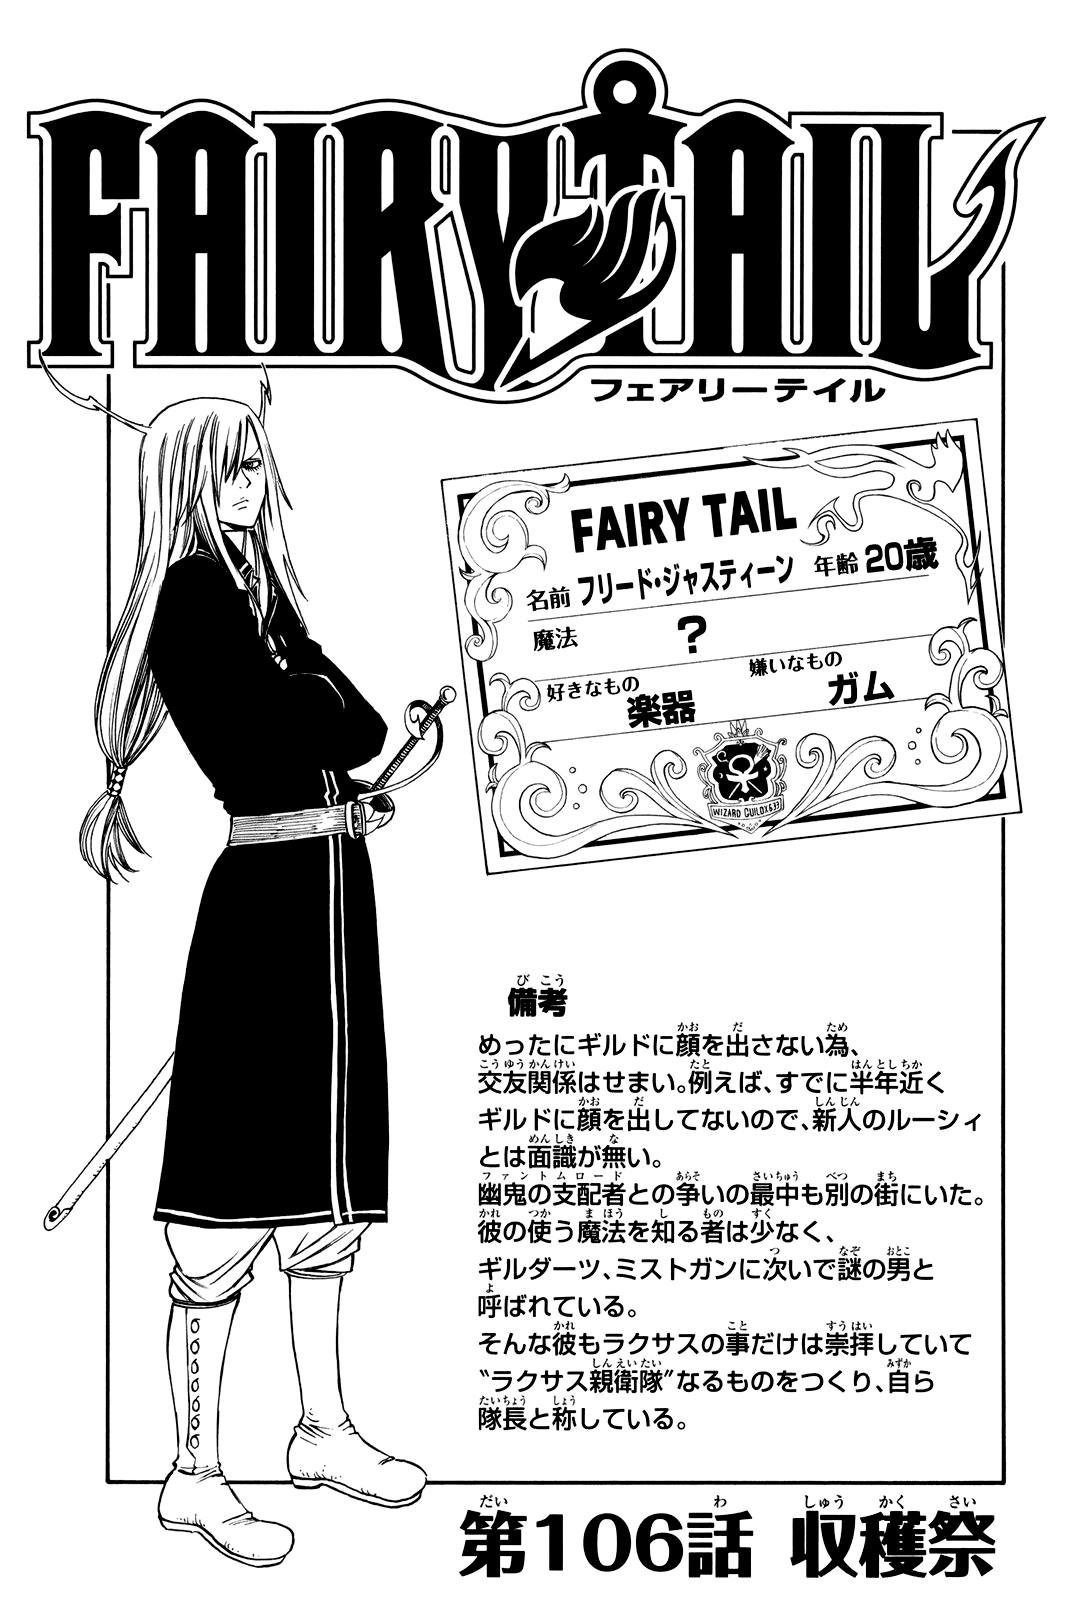 Chapter 106 Fairy Tail Wiki Fandom